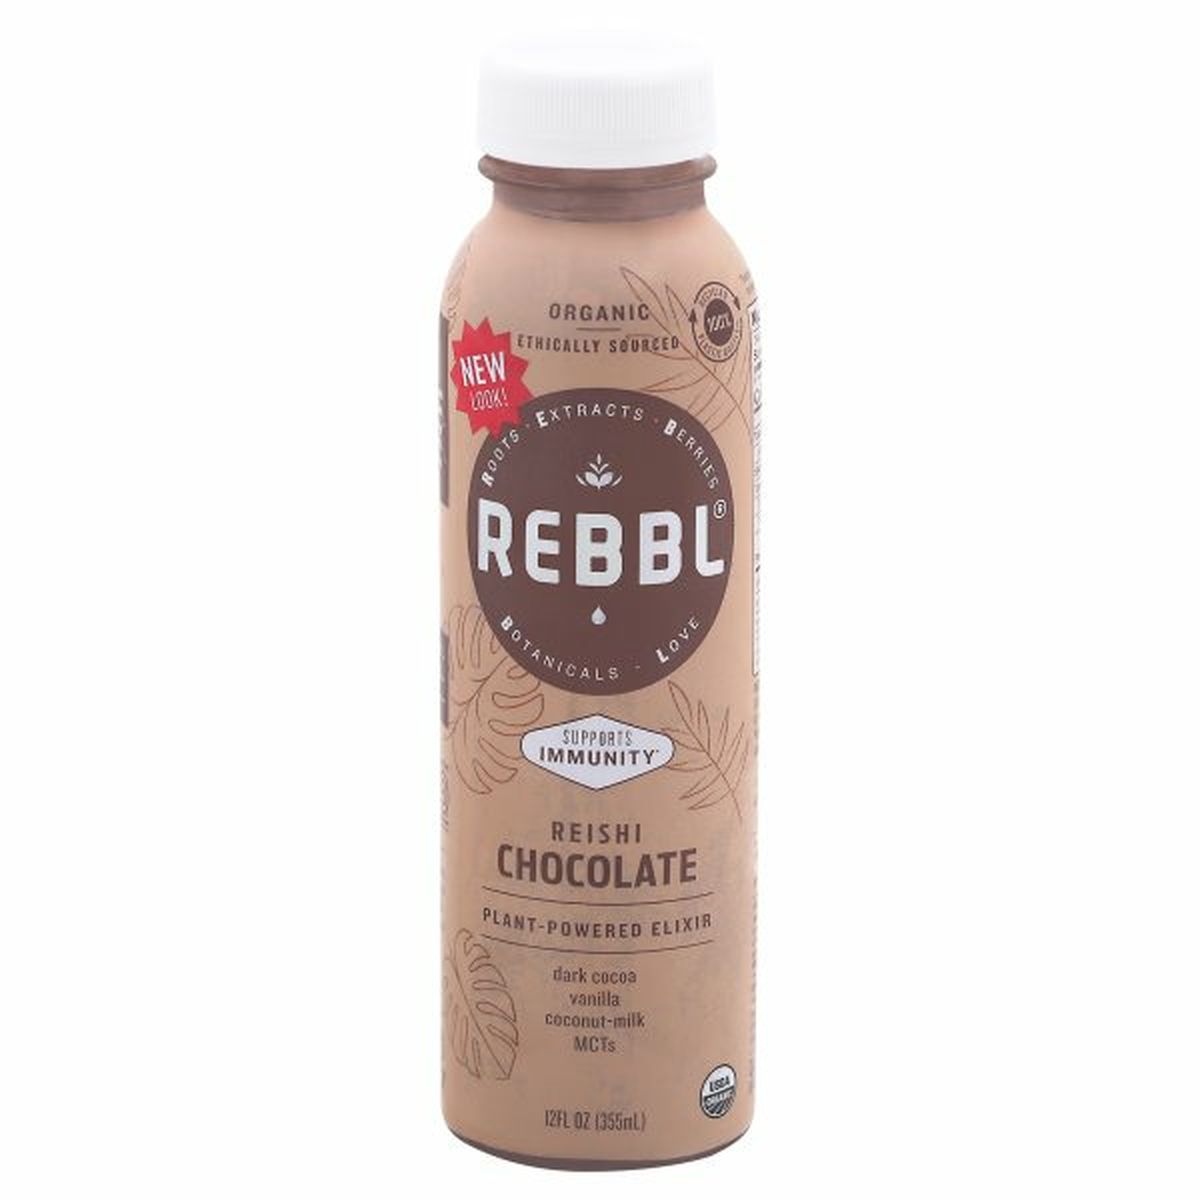 Calories in REBBL Plant-Powered Elixir, Reishi Chocolate